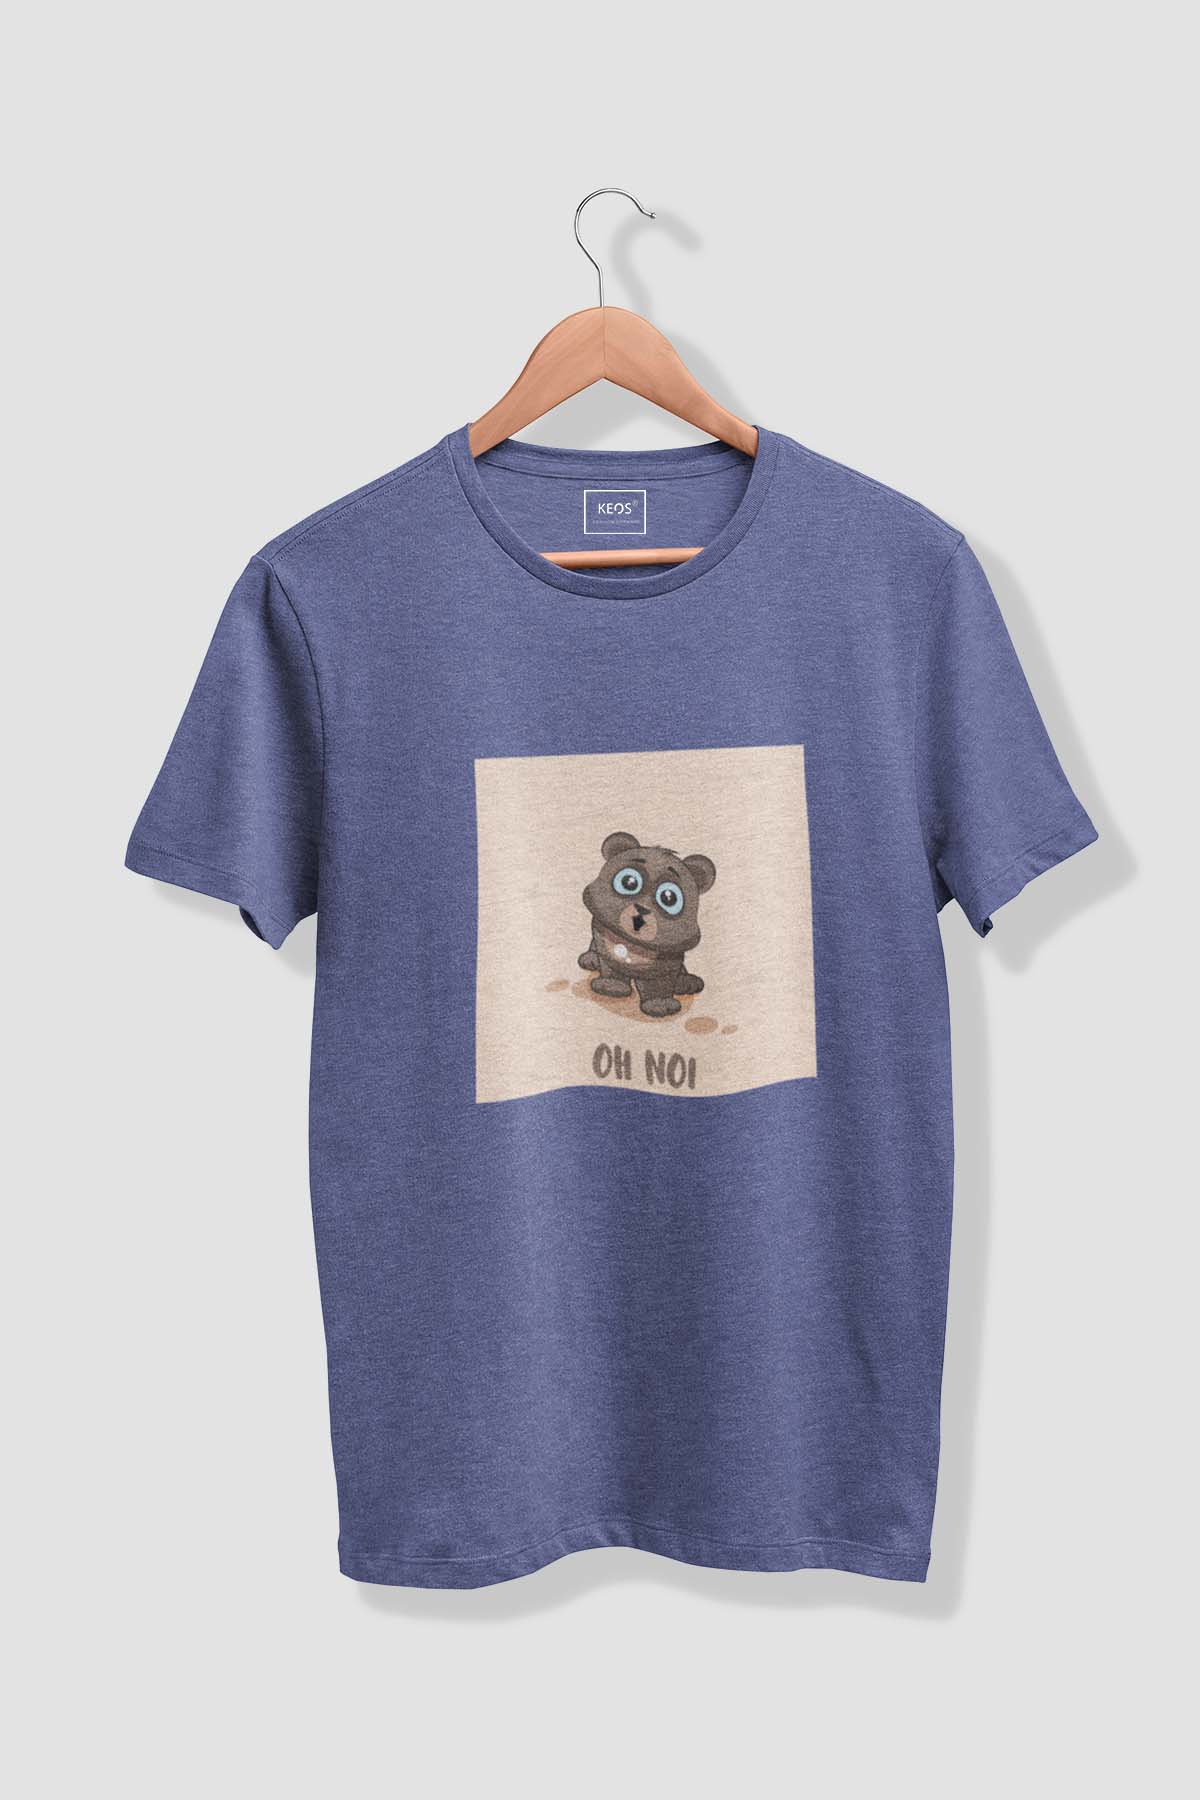 Oh No! - Melange Cotton T-shirt - keos.life